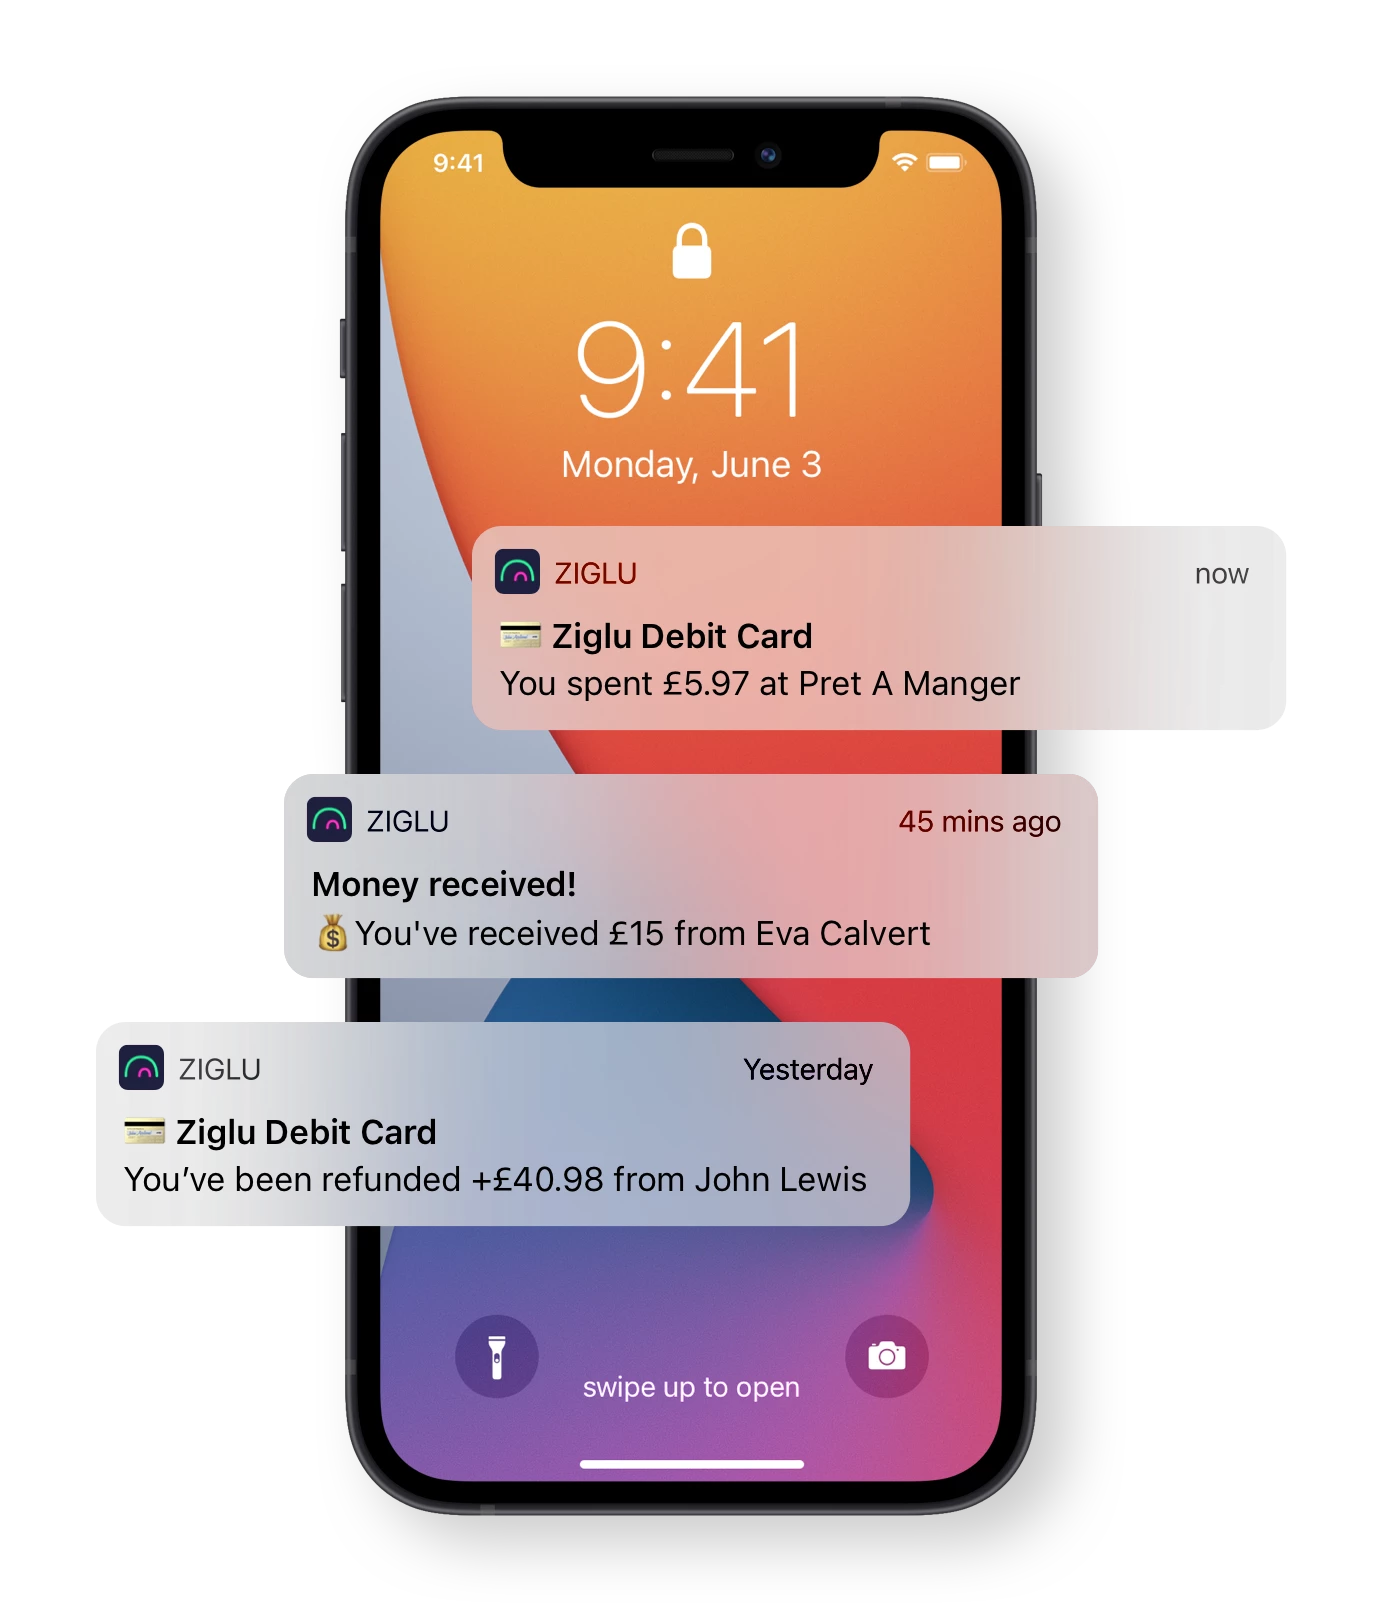 Notifications screen showing activity for debit card spending and receiving money.